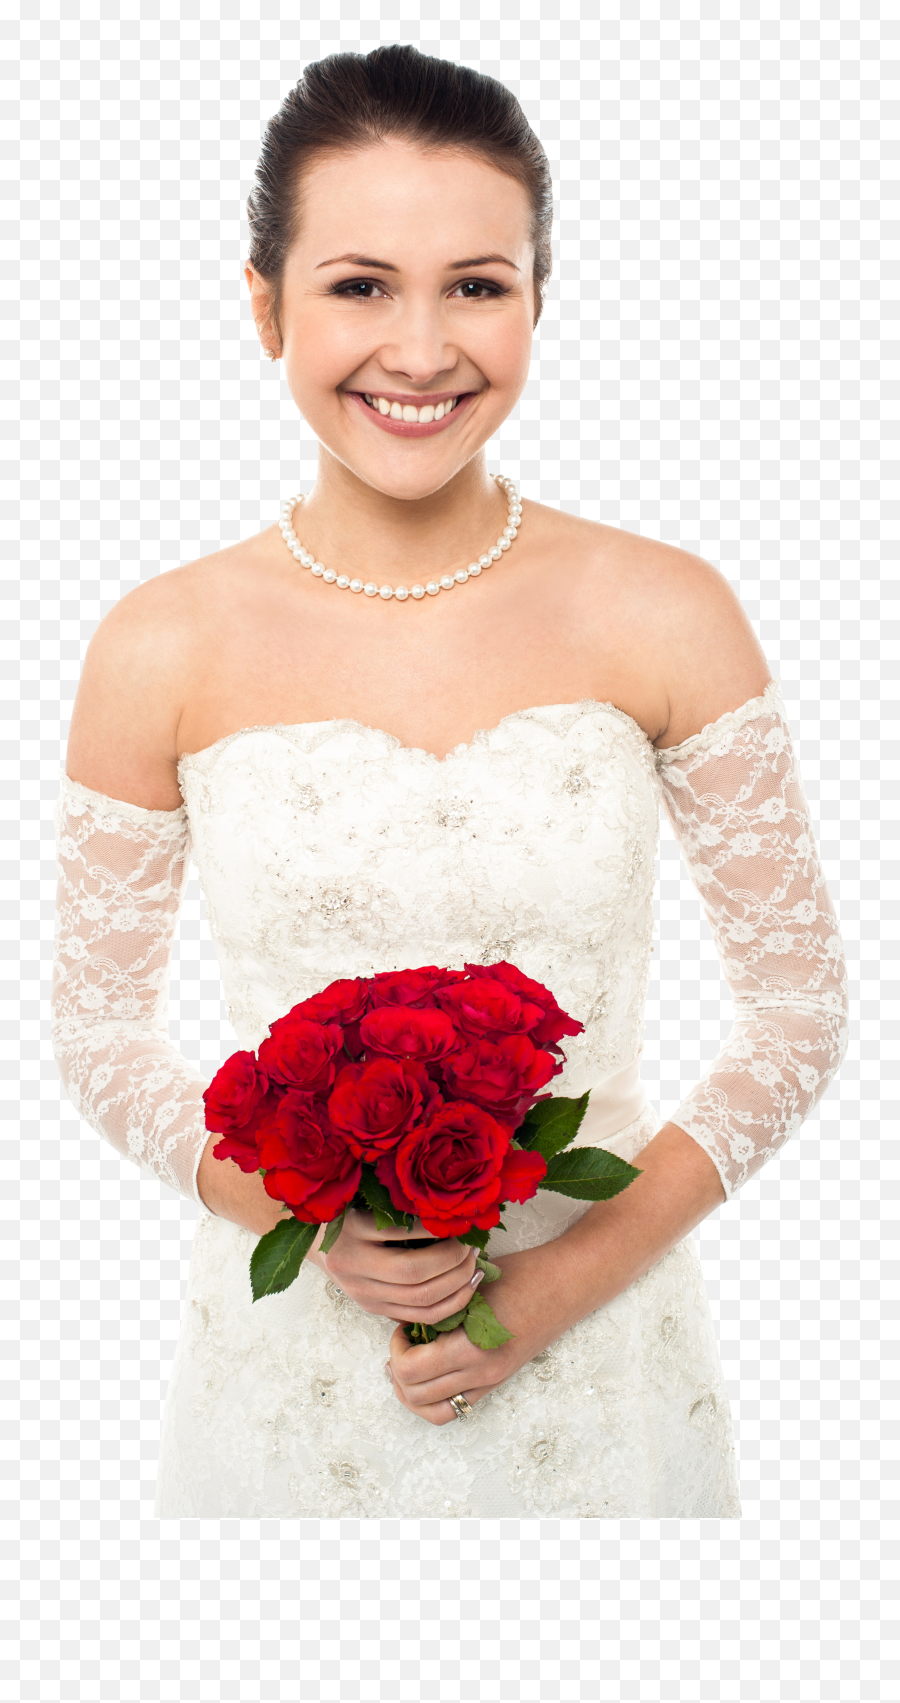 Download Bride Png Image For Free - Bride Png,Bride Png